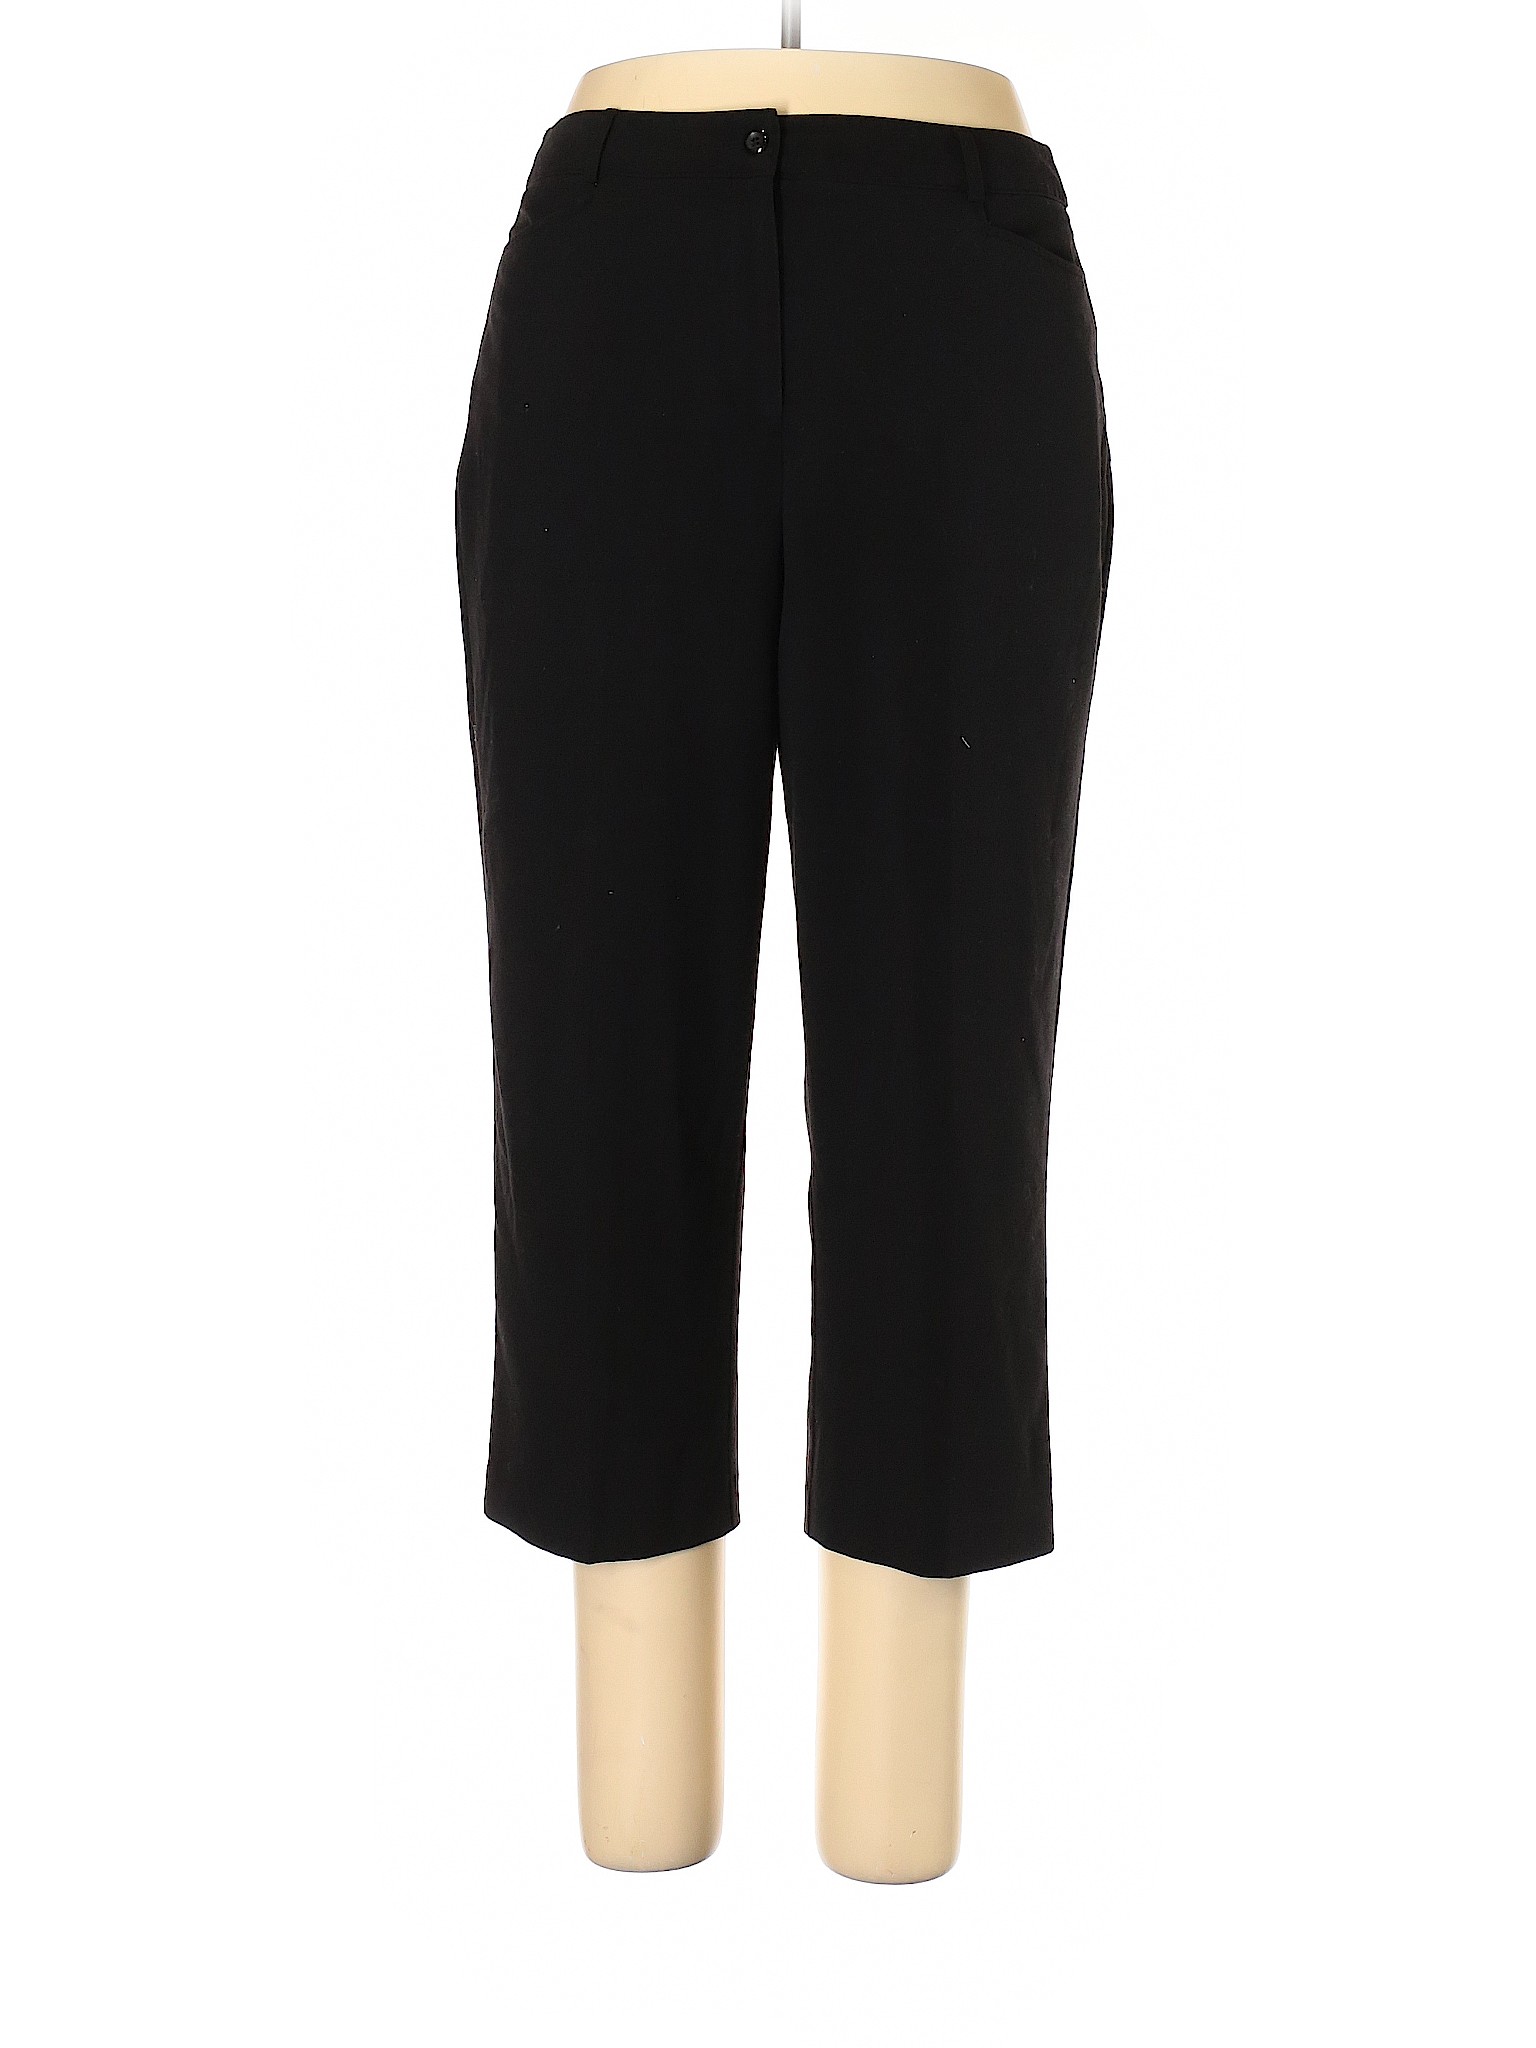 David Dart Women Black Dress Pants 14 | eBay